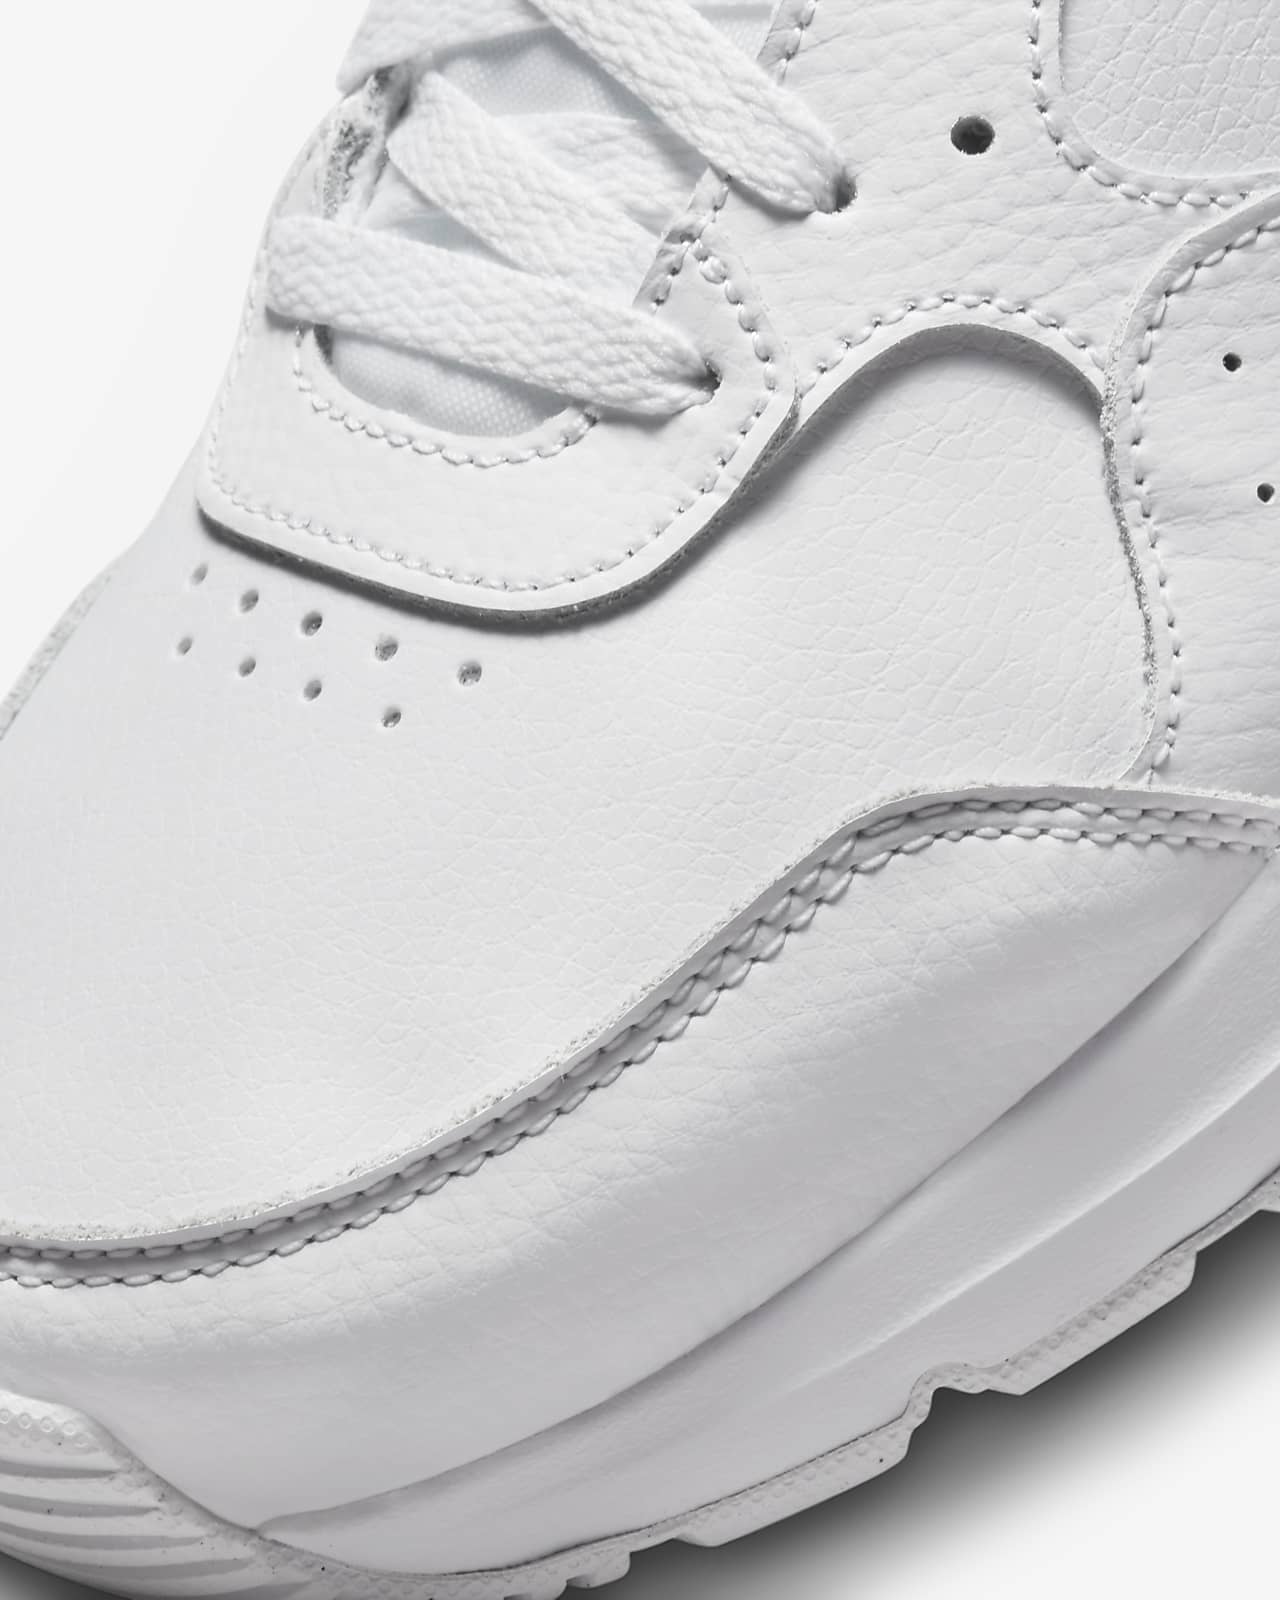 Nike Sneakers | Chron 2 Shoes Black/White-Black - Mens ⋆ Drzubedatumbi